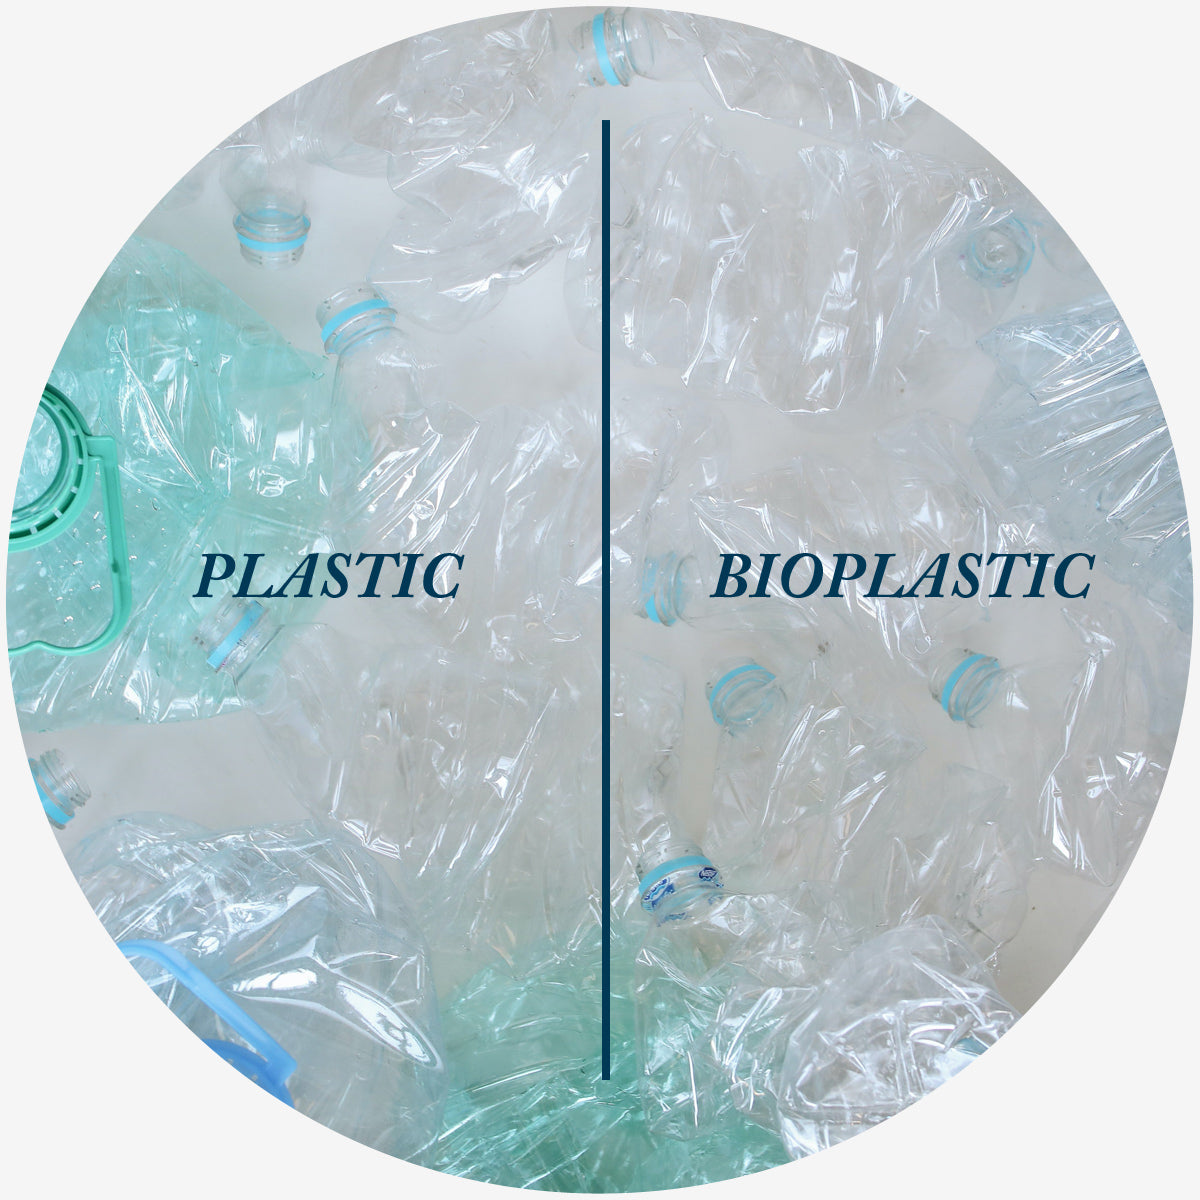 Plastic vs bioplastic